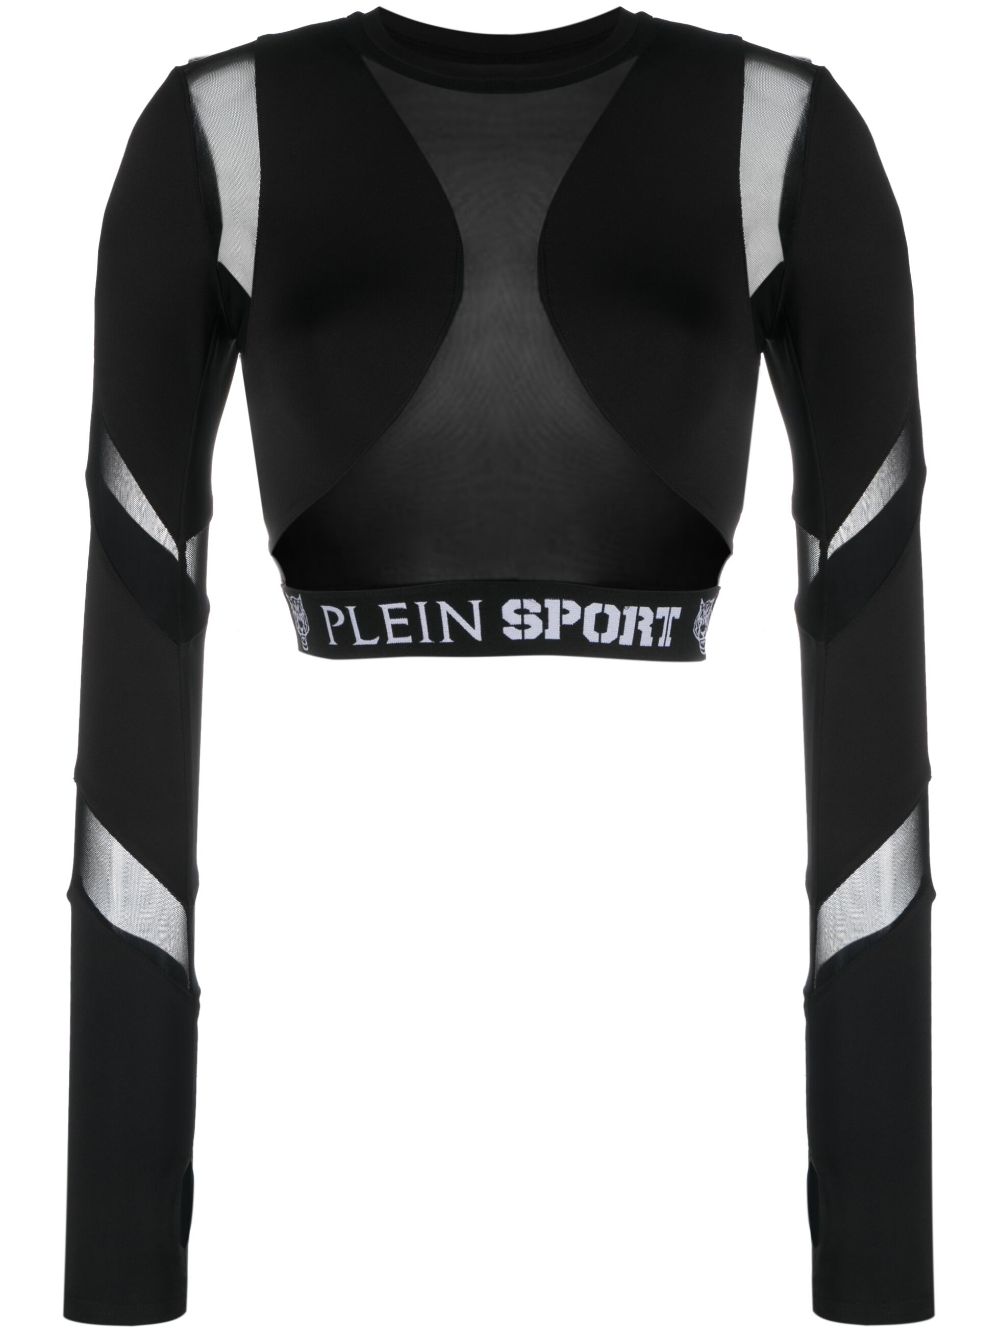 Plein Sport cut-out detail long-sleeved crop top - Black